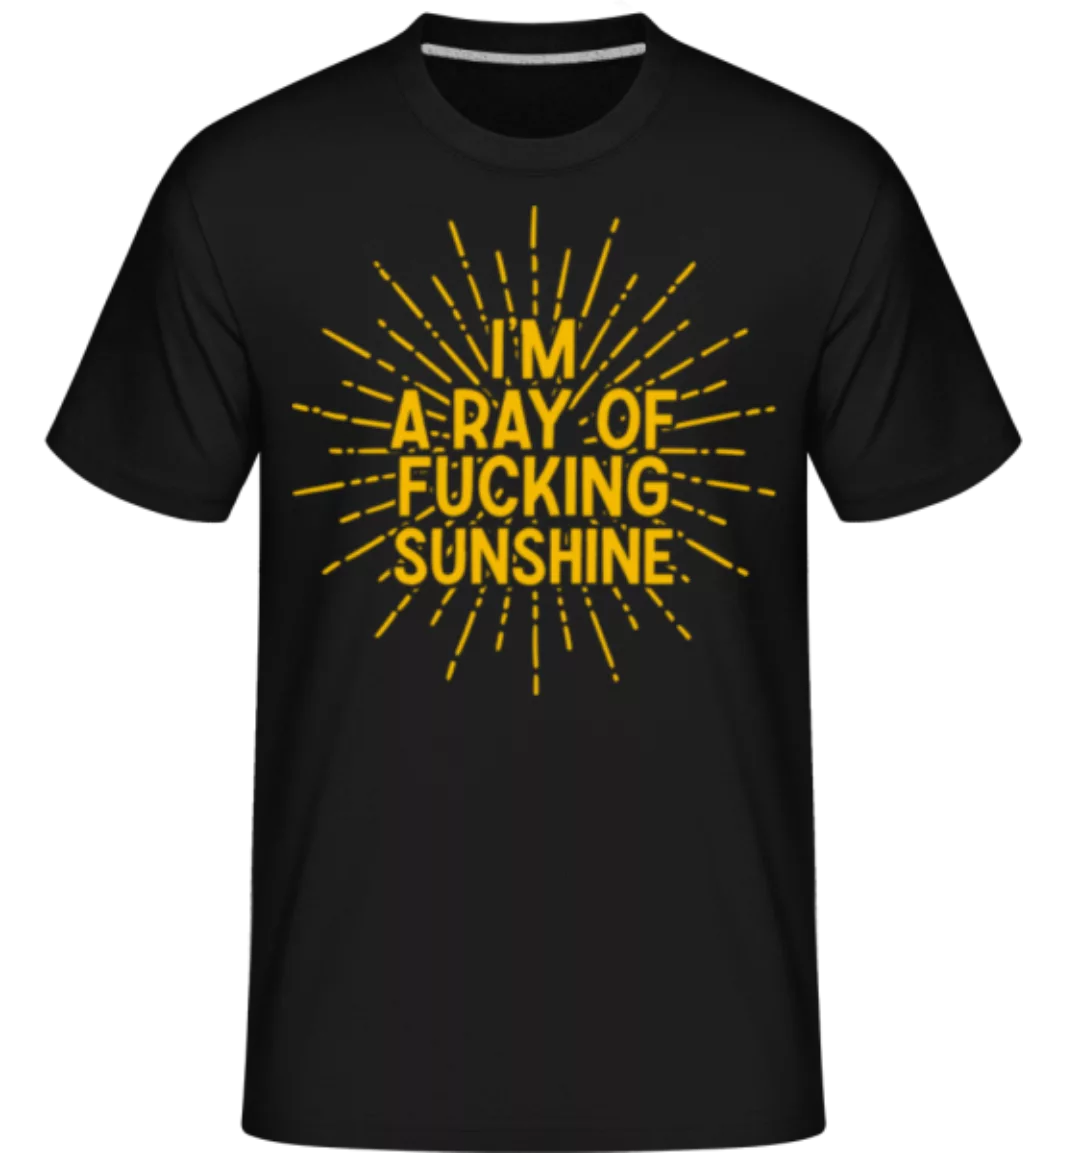 I'm A Ray Of Fckn Sunshine · Shirtinator Männer T-Shirt günstig online kaufen